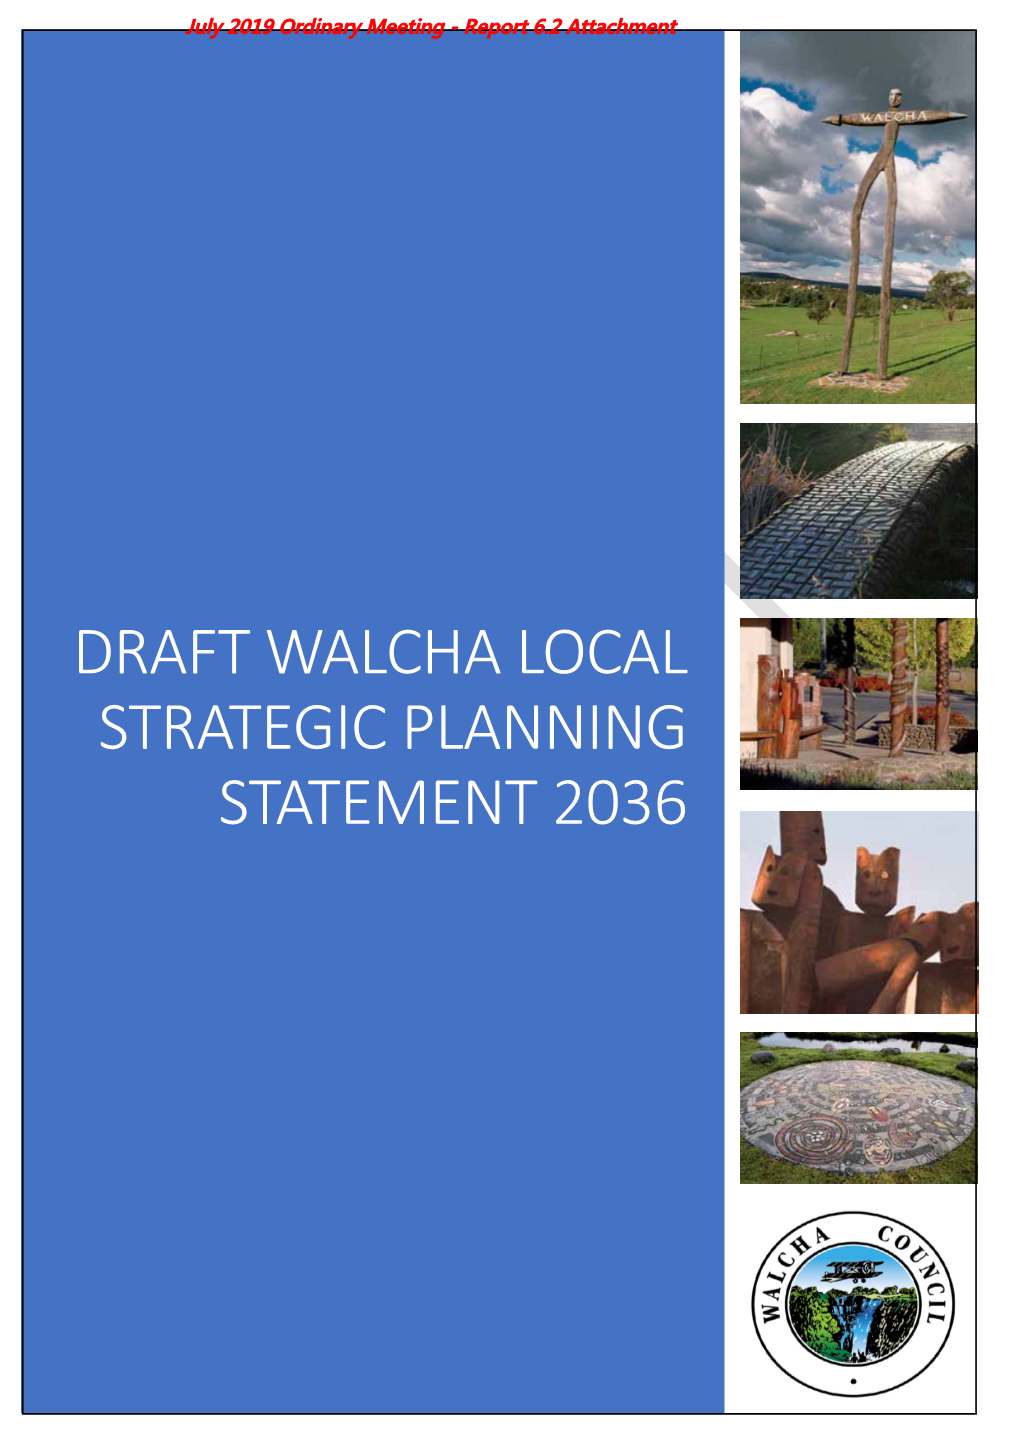 Draft Walcha Local Strategic Planning Statement 2036